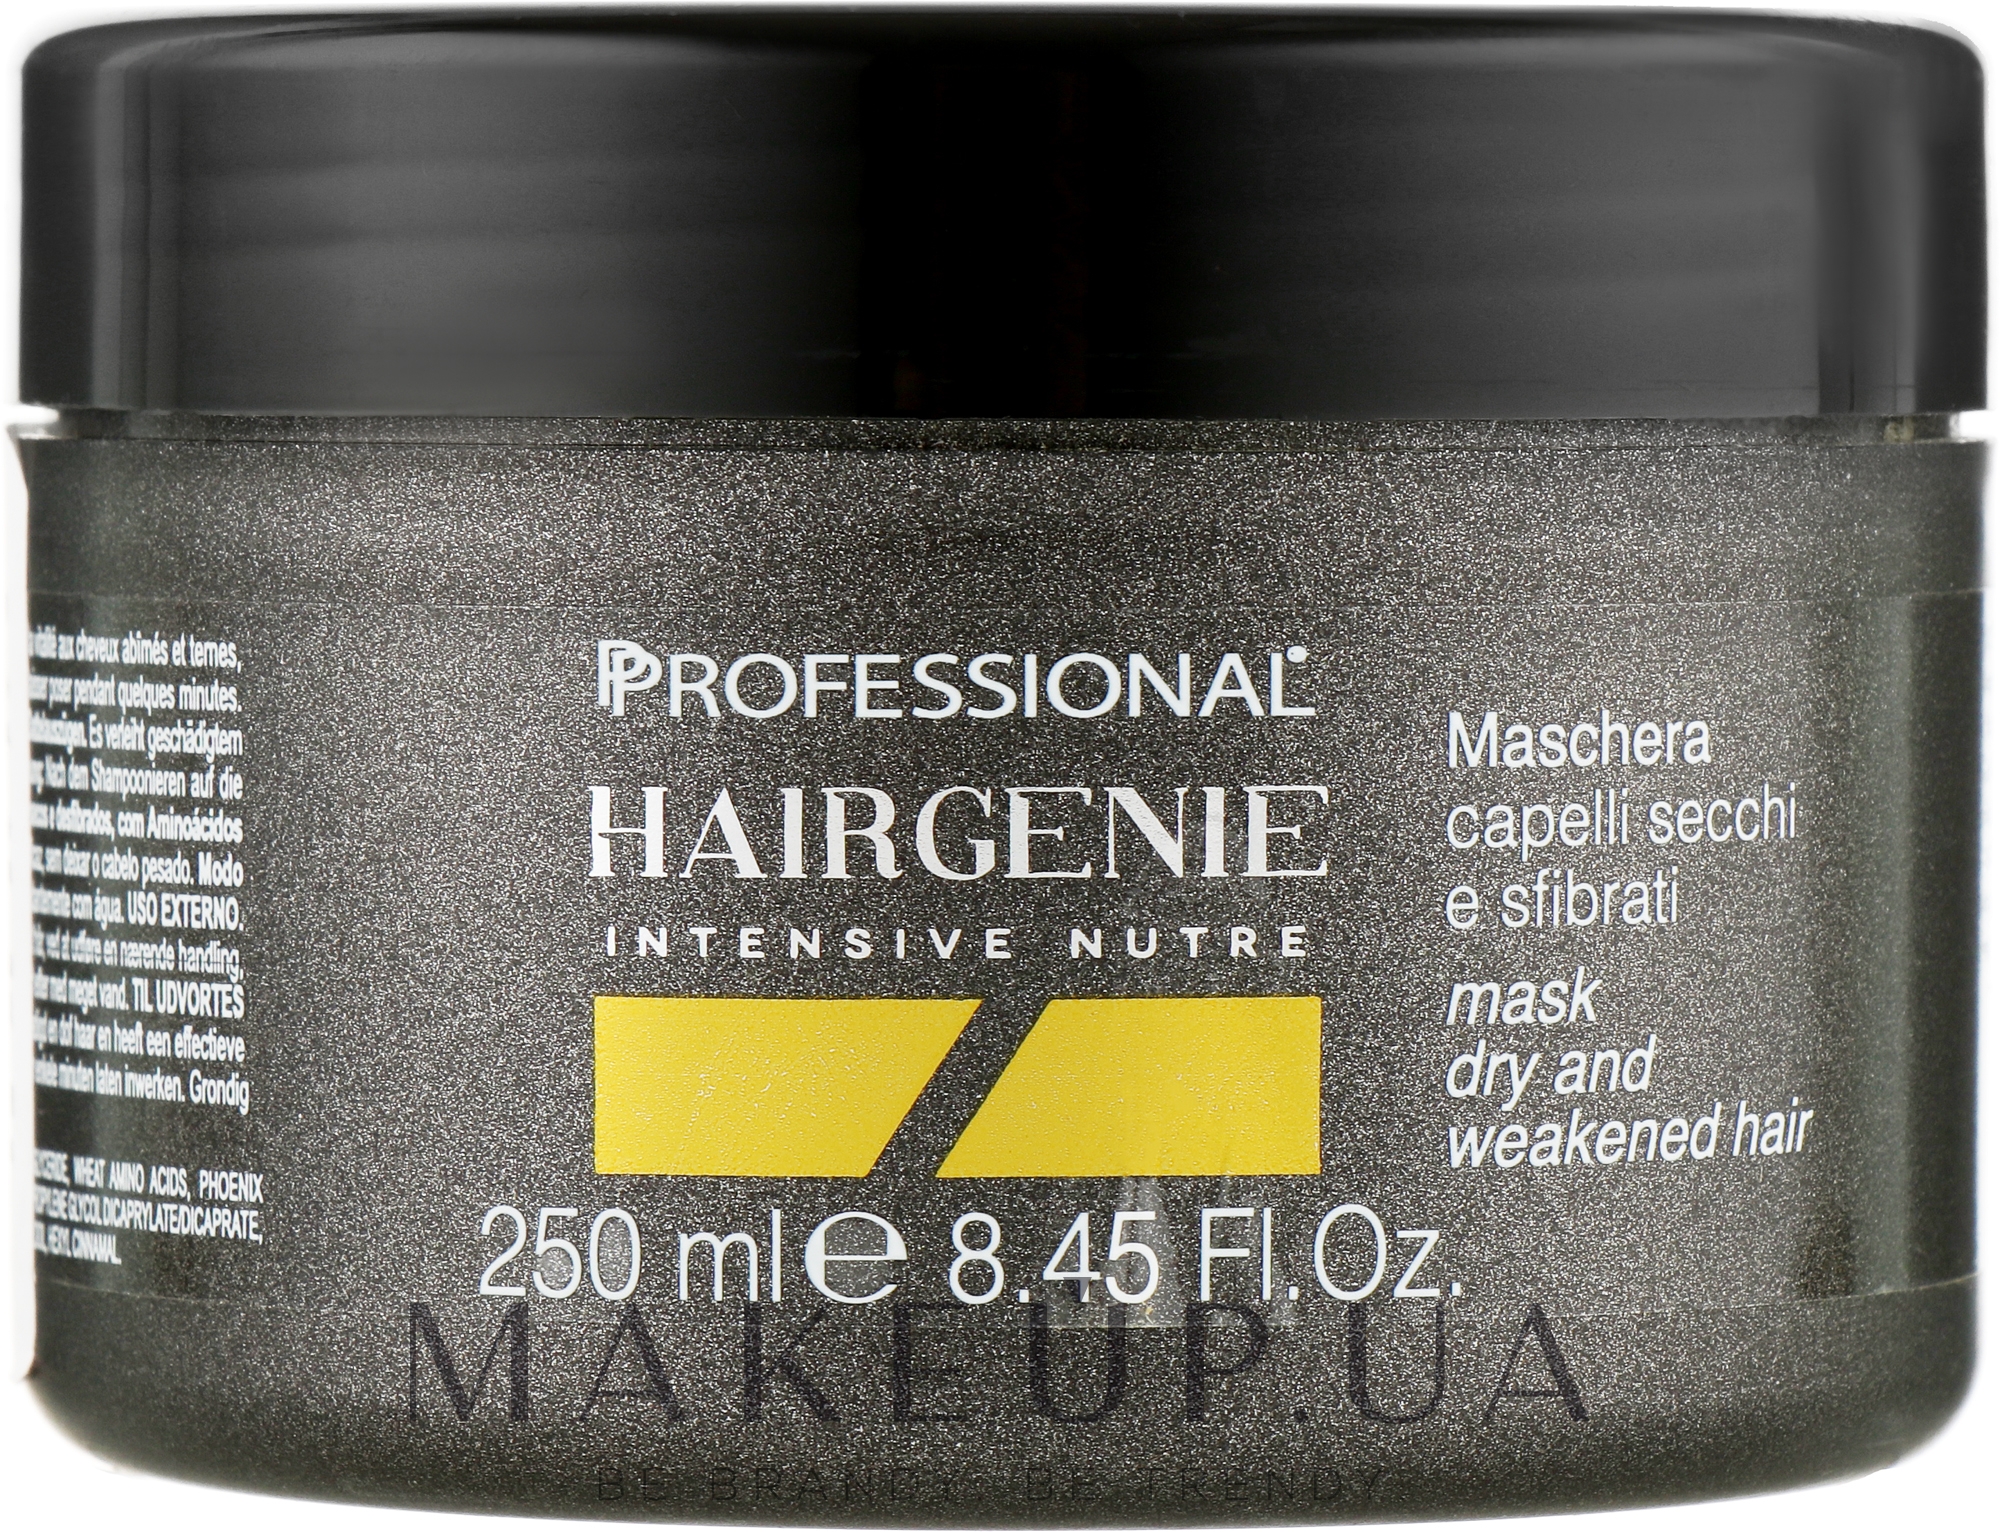 Маска для волос "Интенсивное питание" - Professional Hairgenie Intensive Nutre Mask — фото 250ml